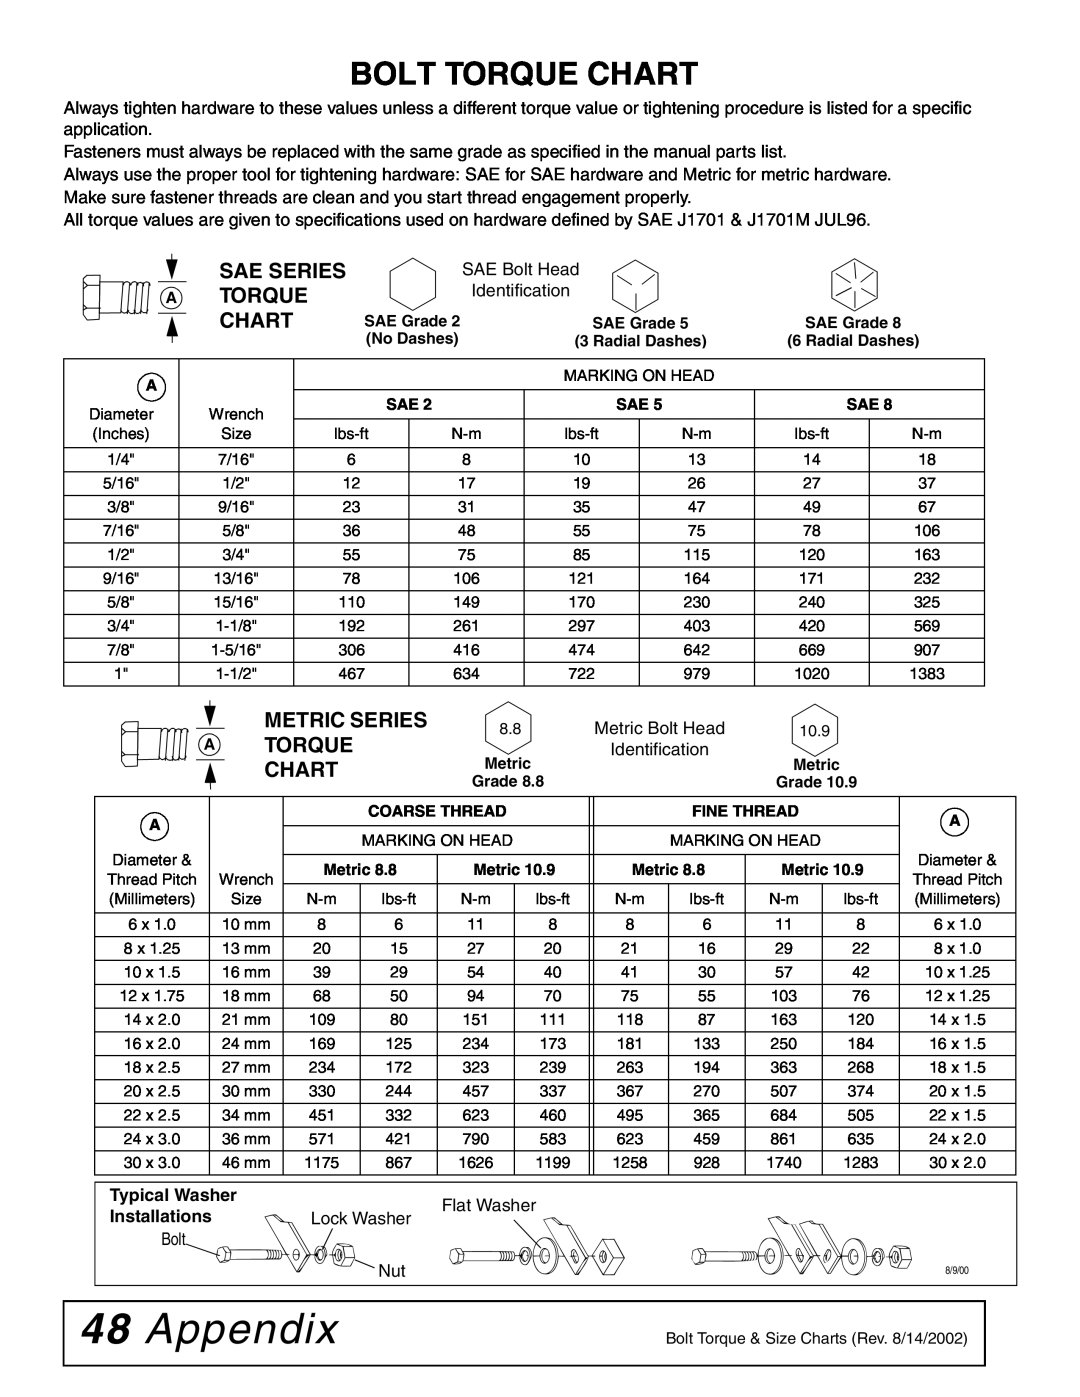 Woods Equipment RCC42 manual 48Appendix, Bolt Torque Chart, Sae Series A Torque Chart, Metric Series 